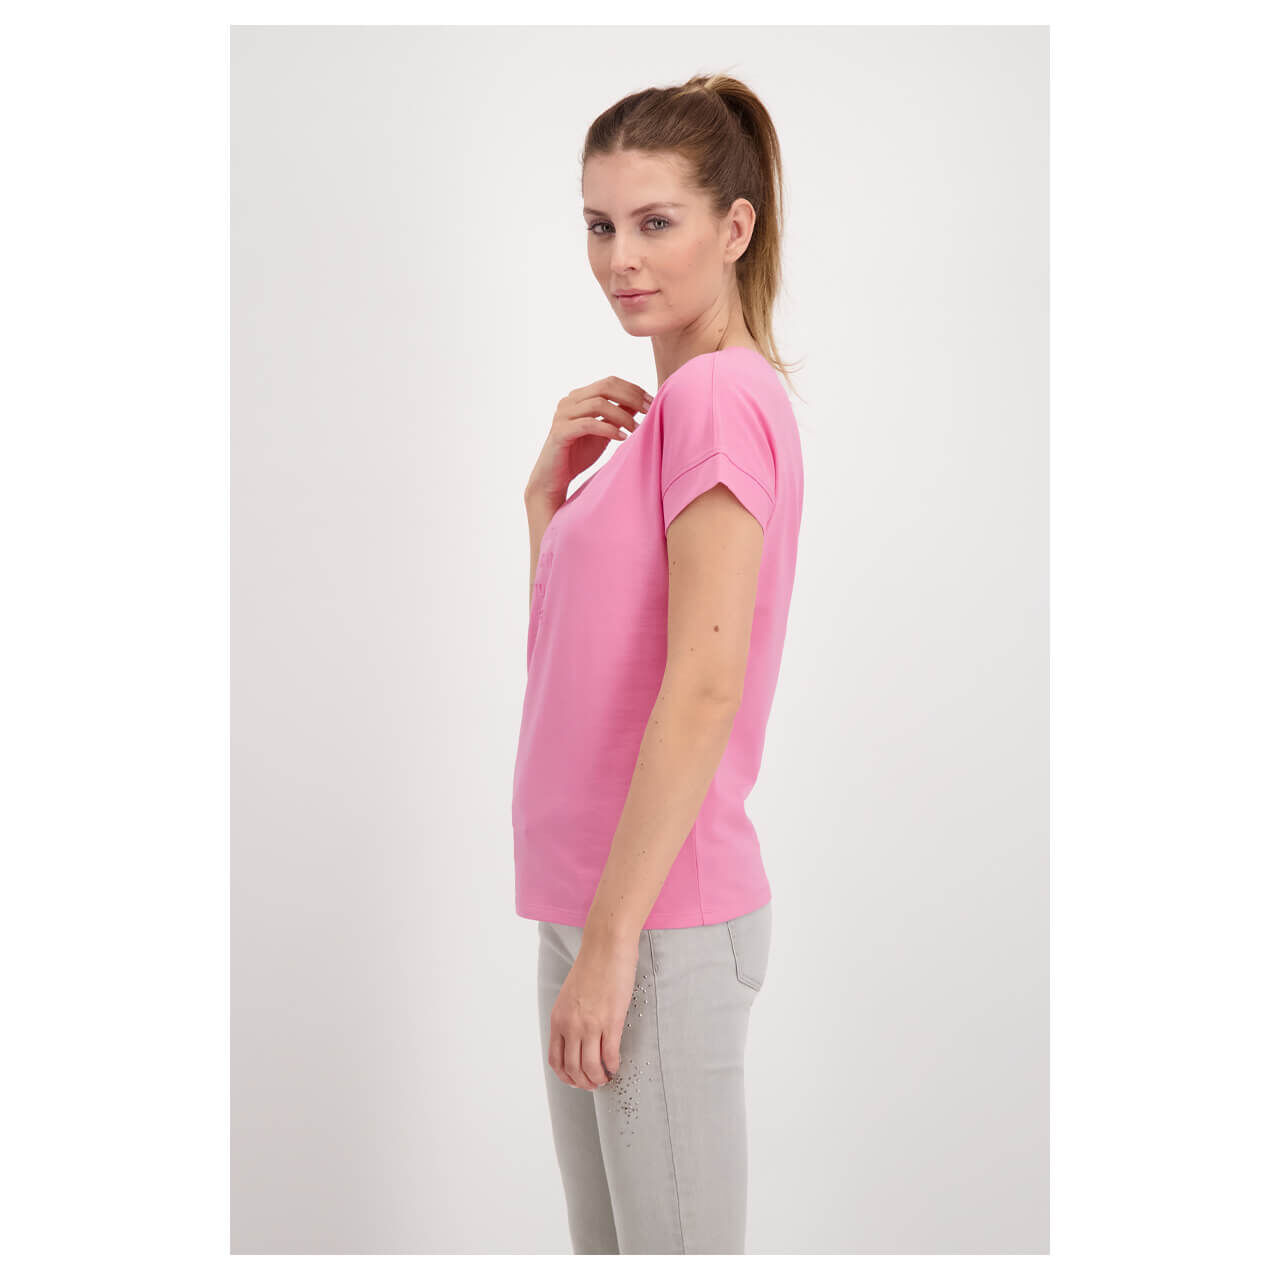 Monari T-Shirt für Damen in Rosa, FarbNr.: 463